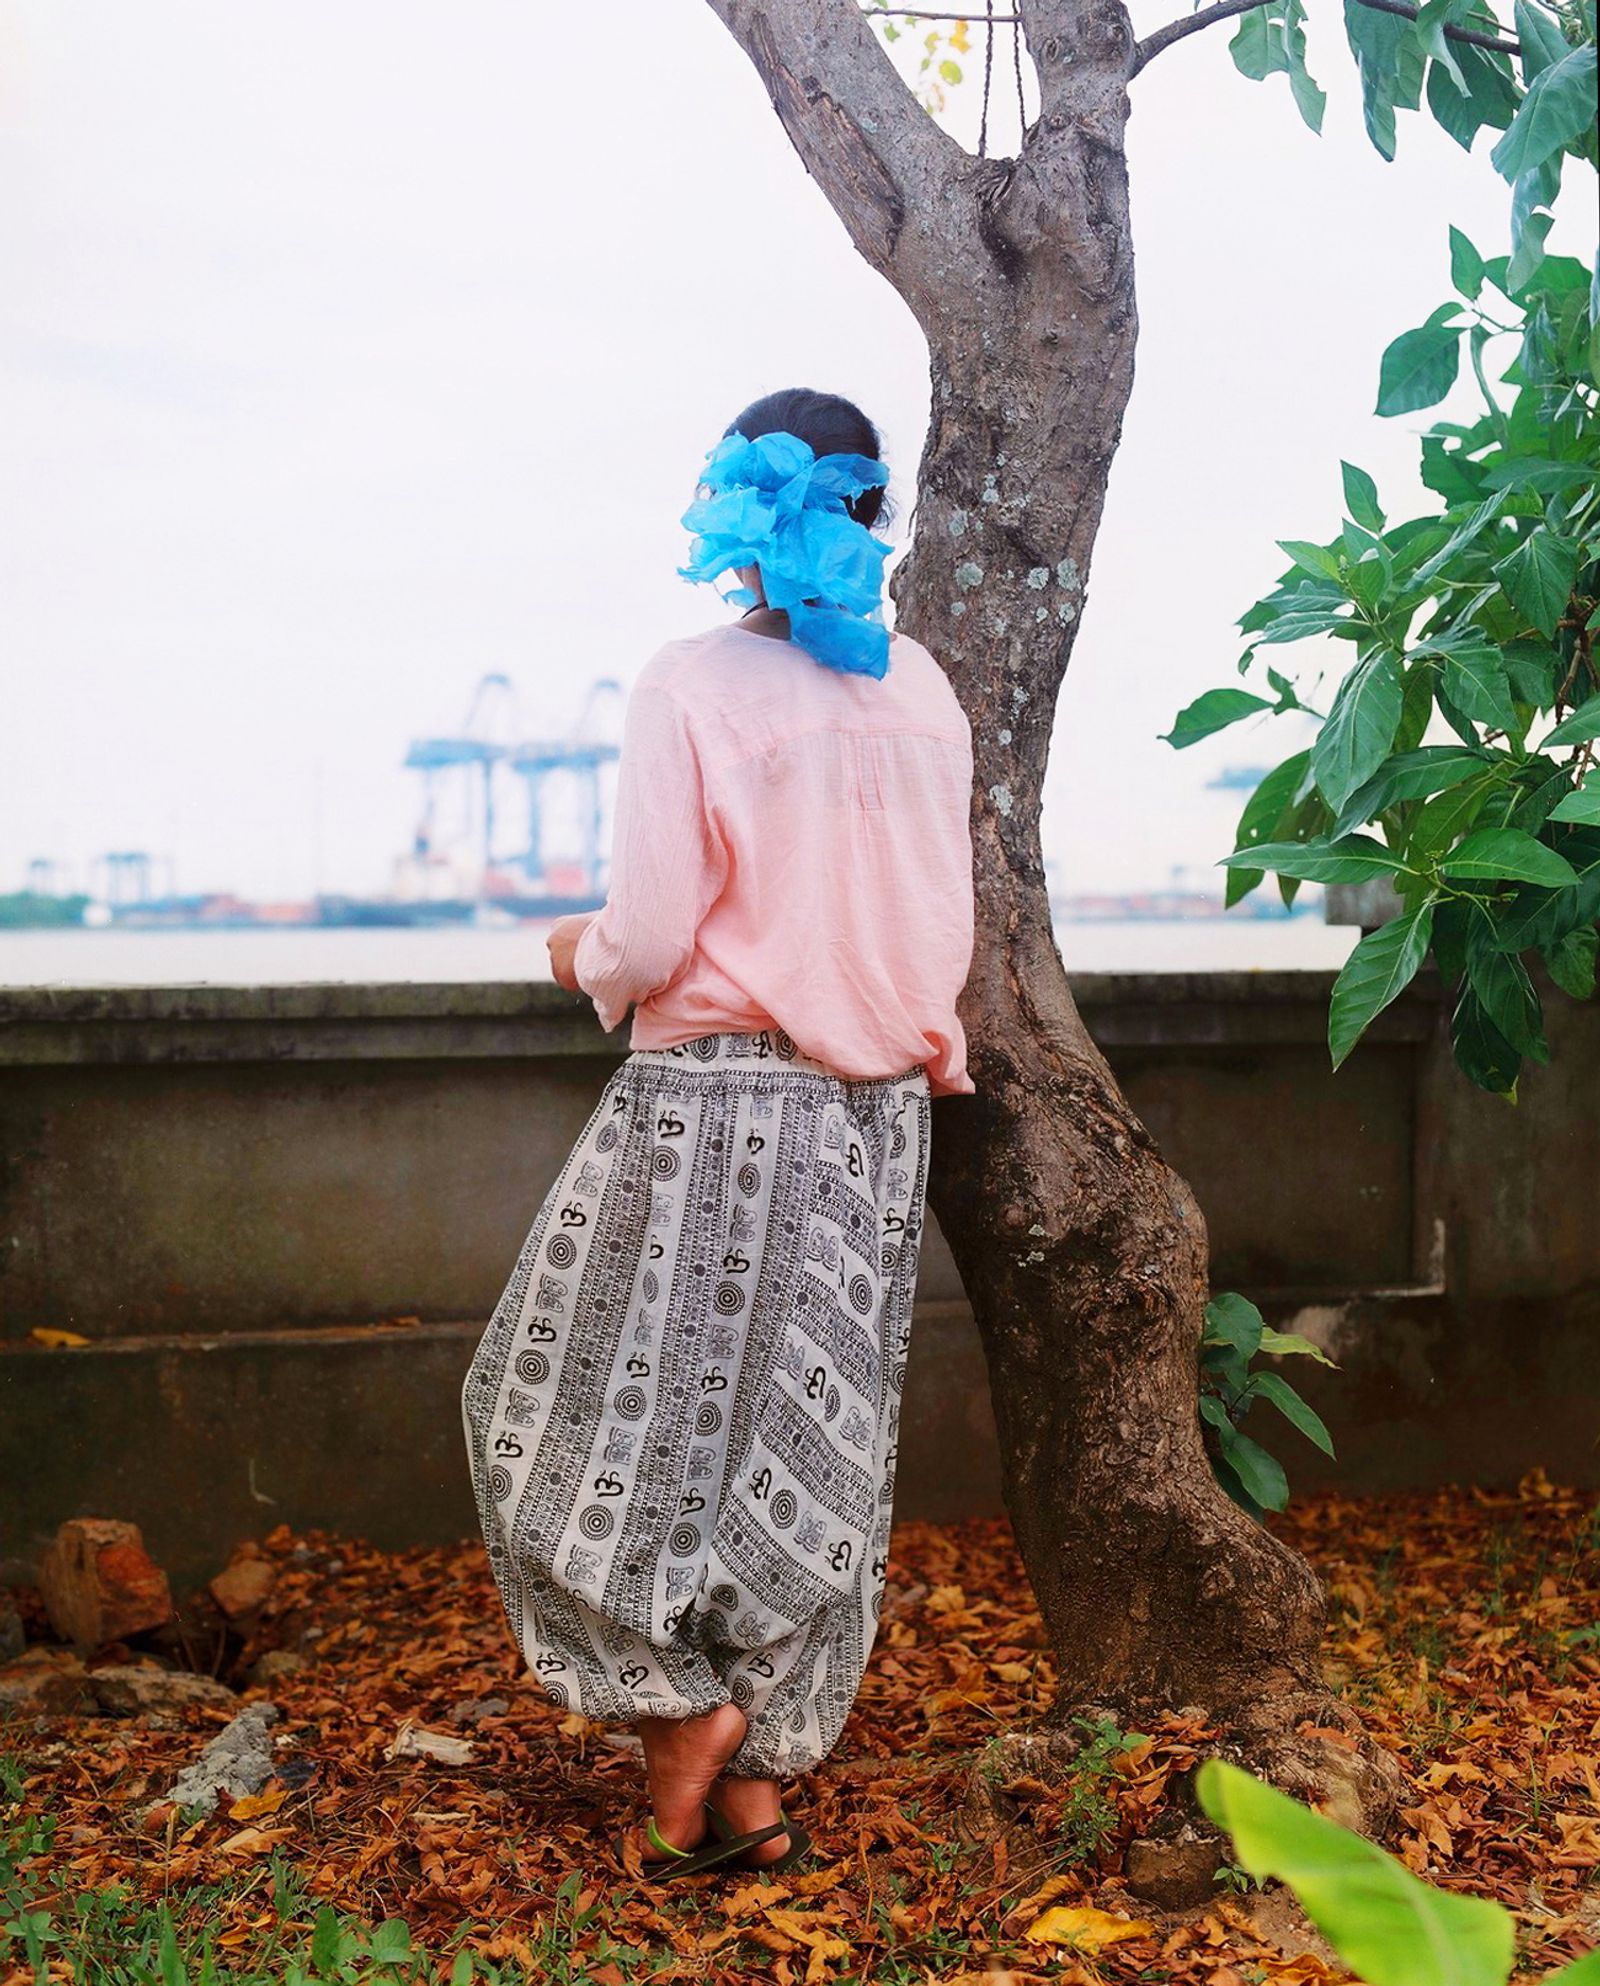 © Marysa Dowling - Blue Bag, Devaki, Kochi India 2016